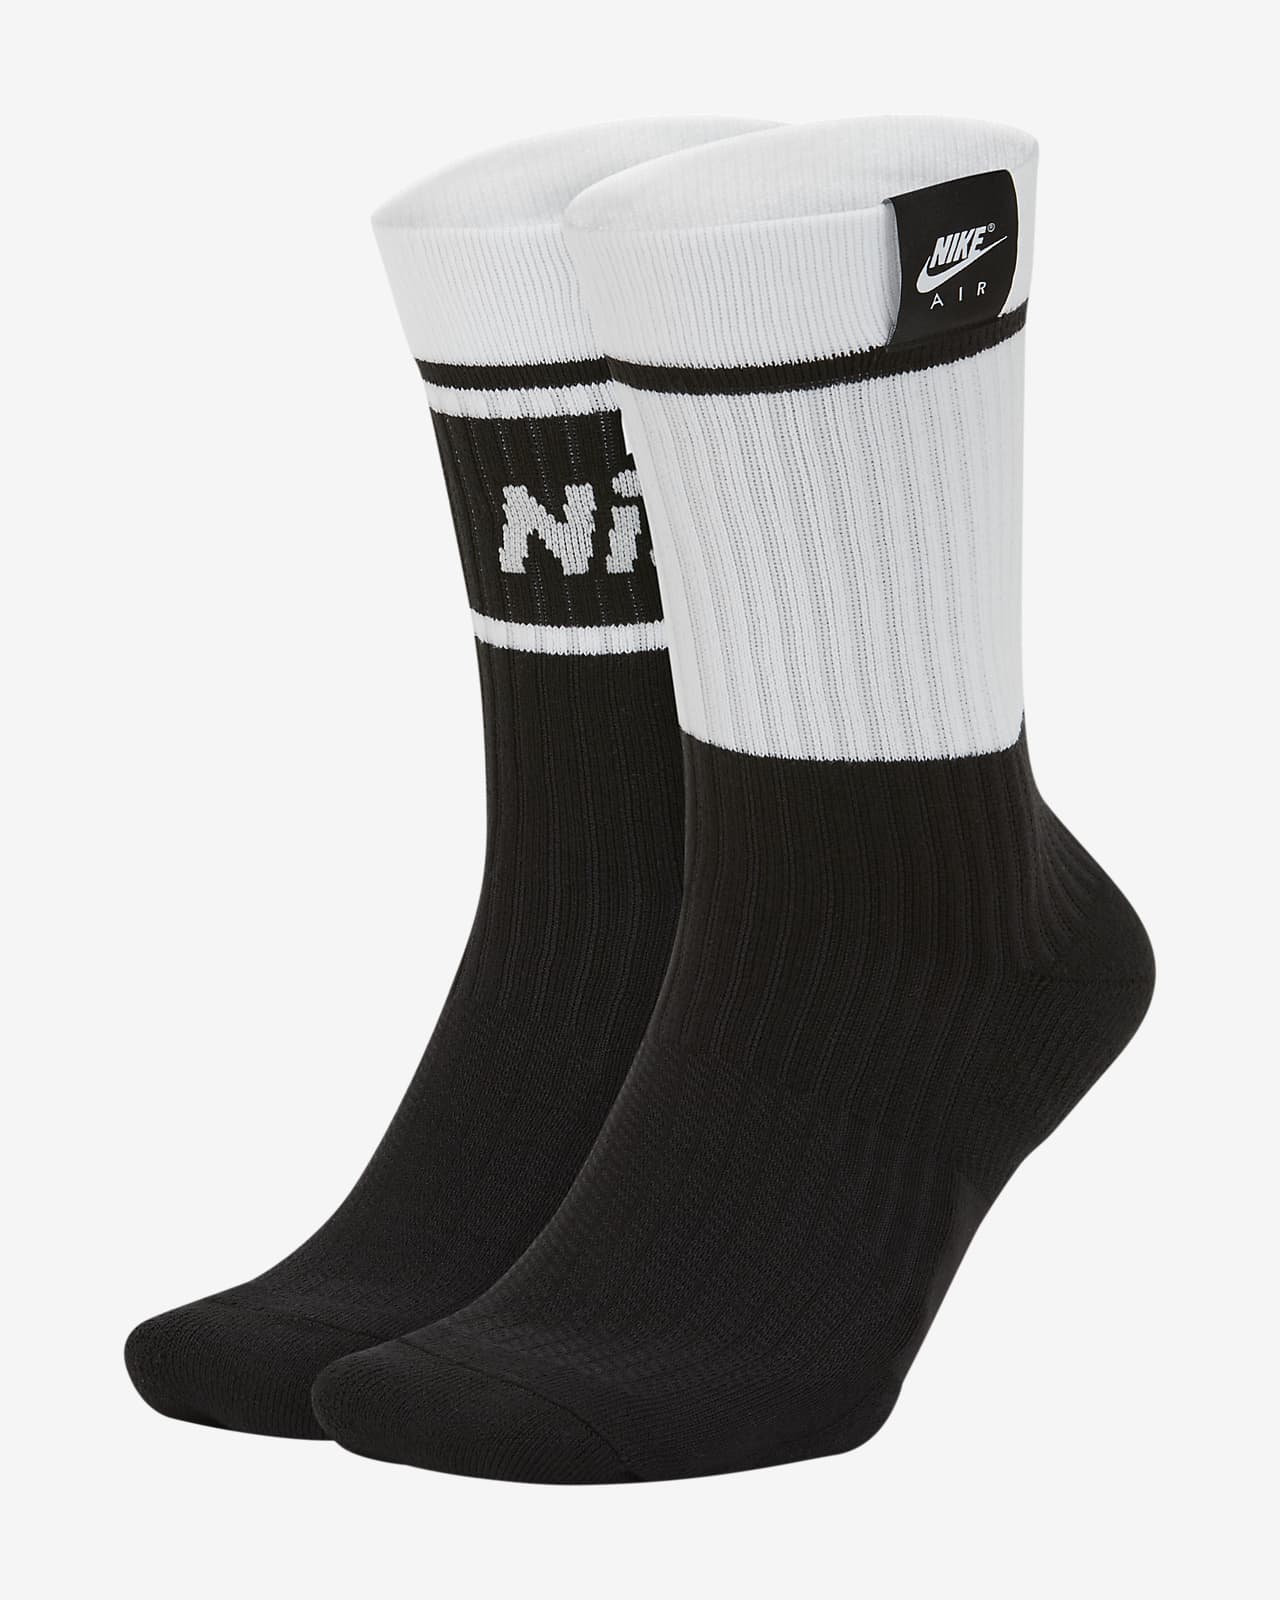 Nike Air SNKR Sox Crew Socks (2 Pairs 